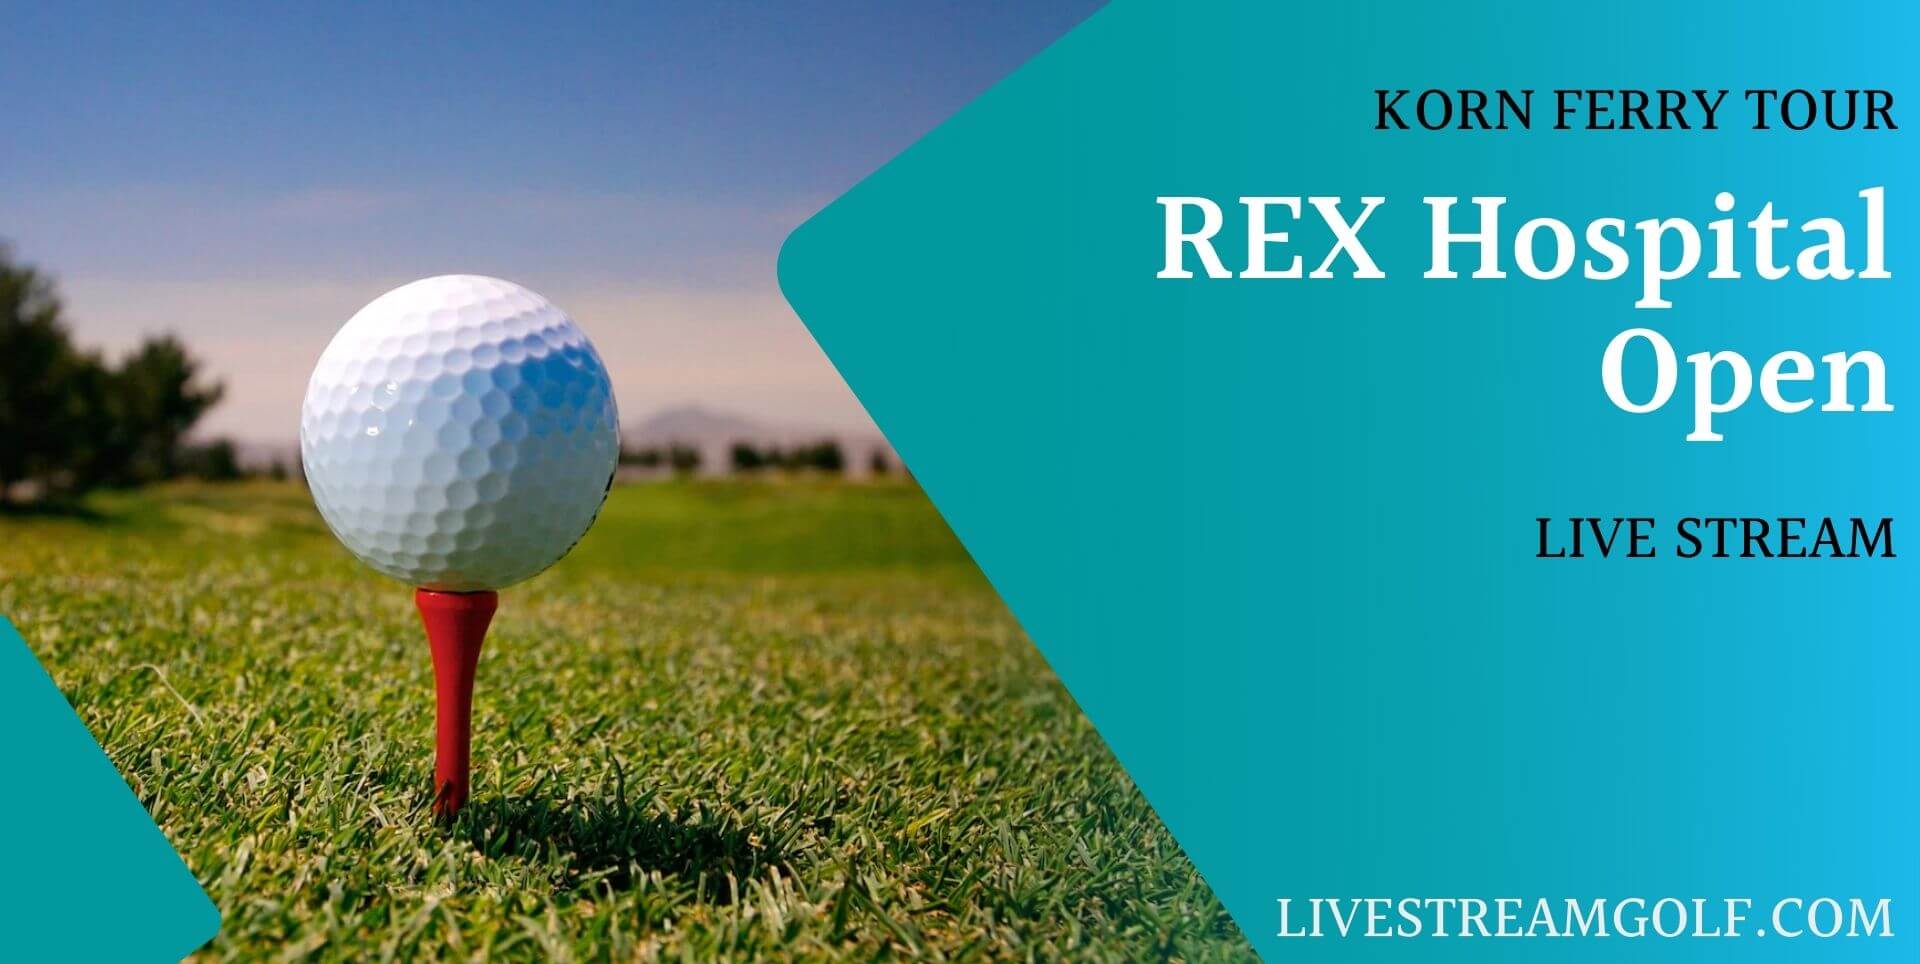 REX Hospital Open Korn Ferry Live Streaming